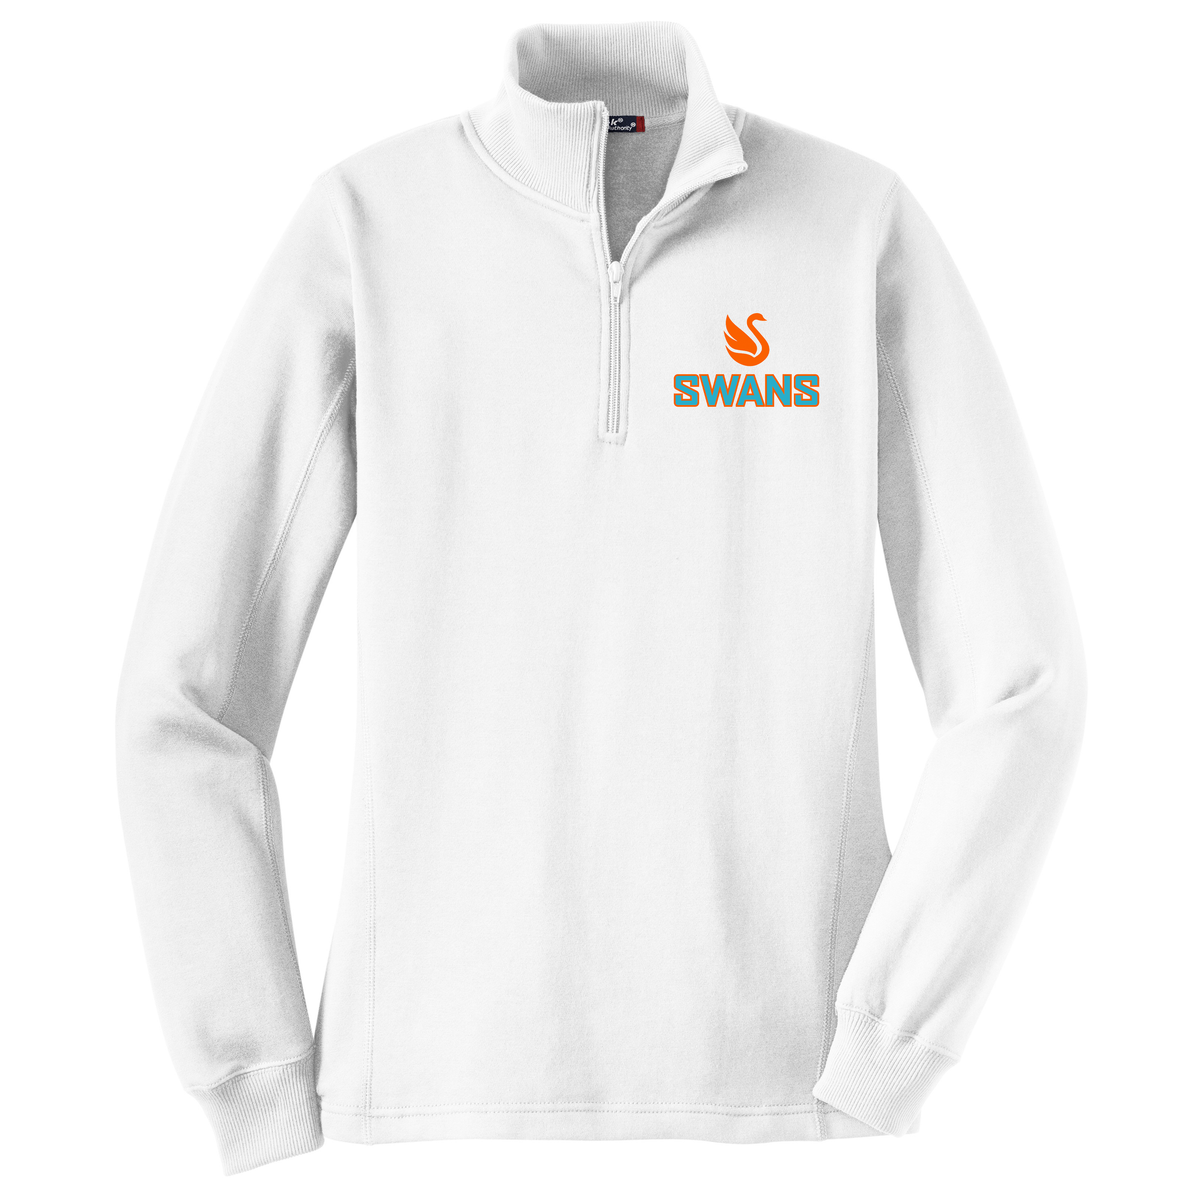 Swans Lacrosse Women's 1/4 Zip Fleece